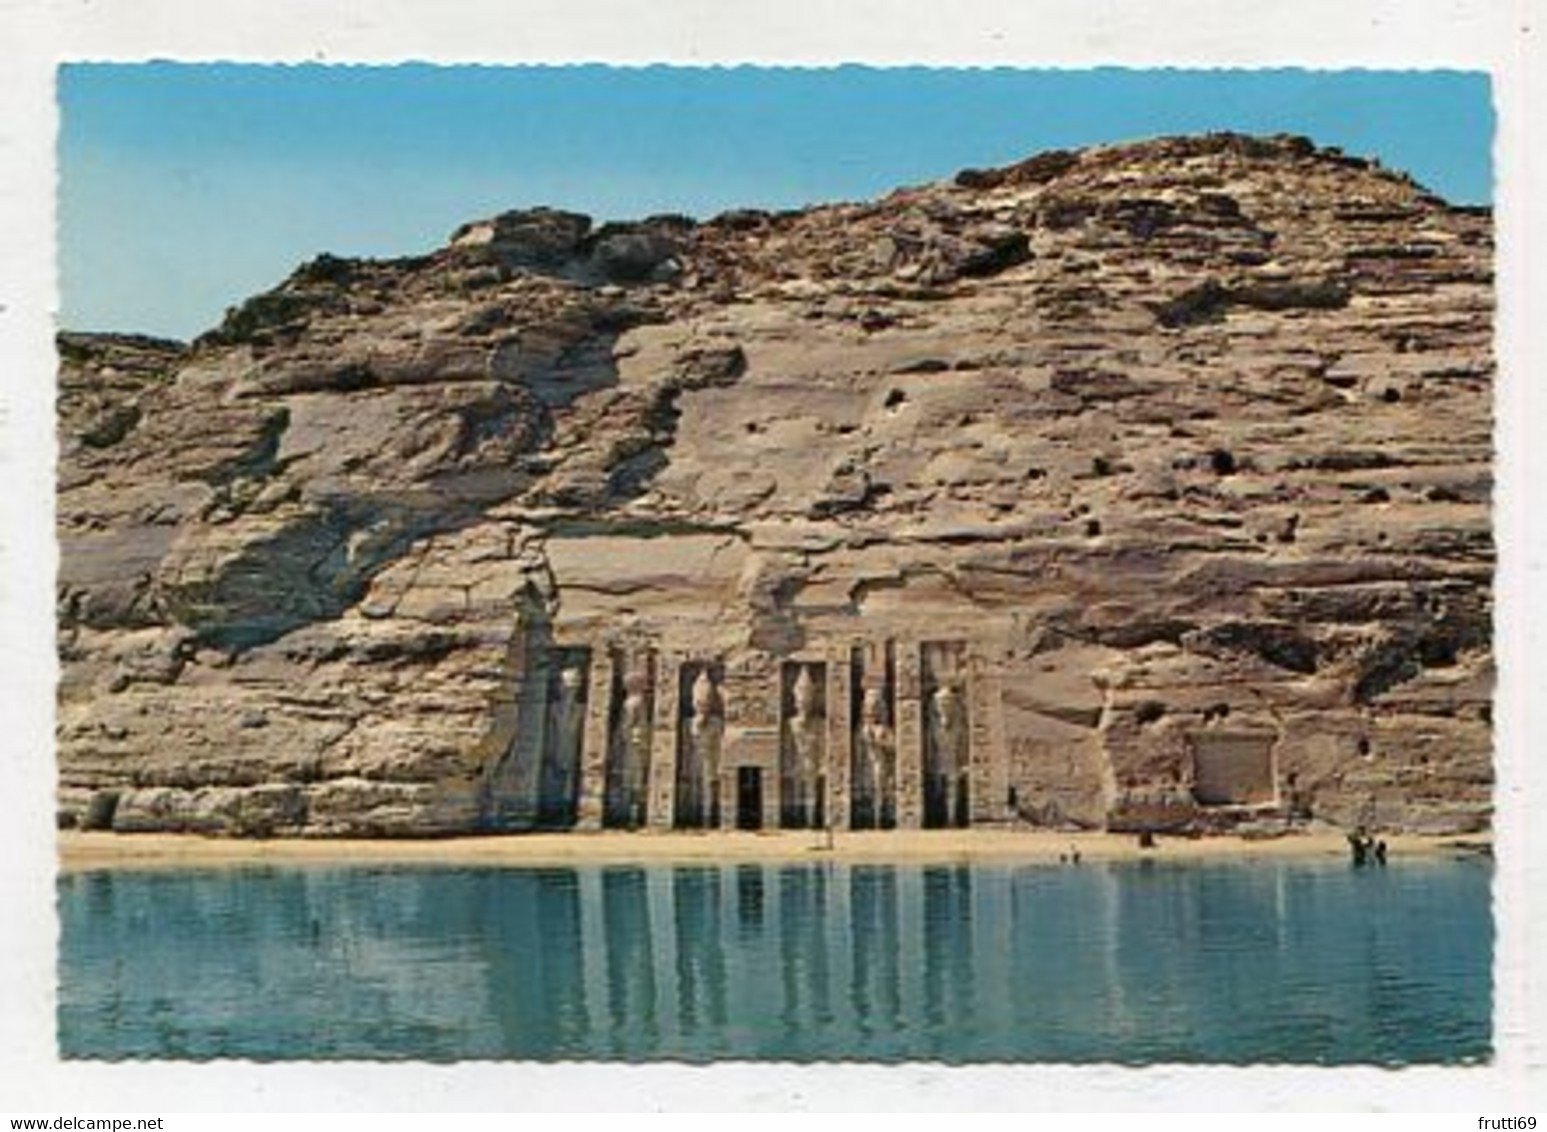 AK 057706 EGYPT - Abu Simbel - Small Rock Temple - Abu Simbel Temples